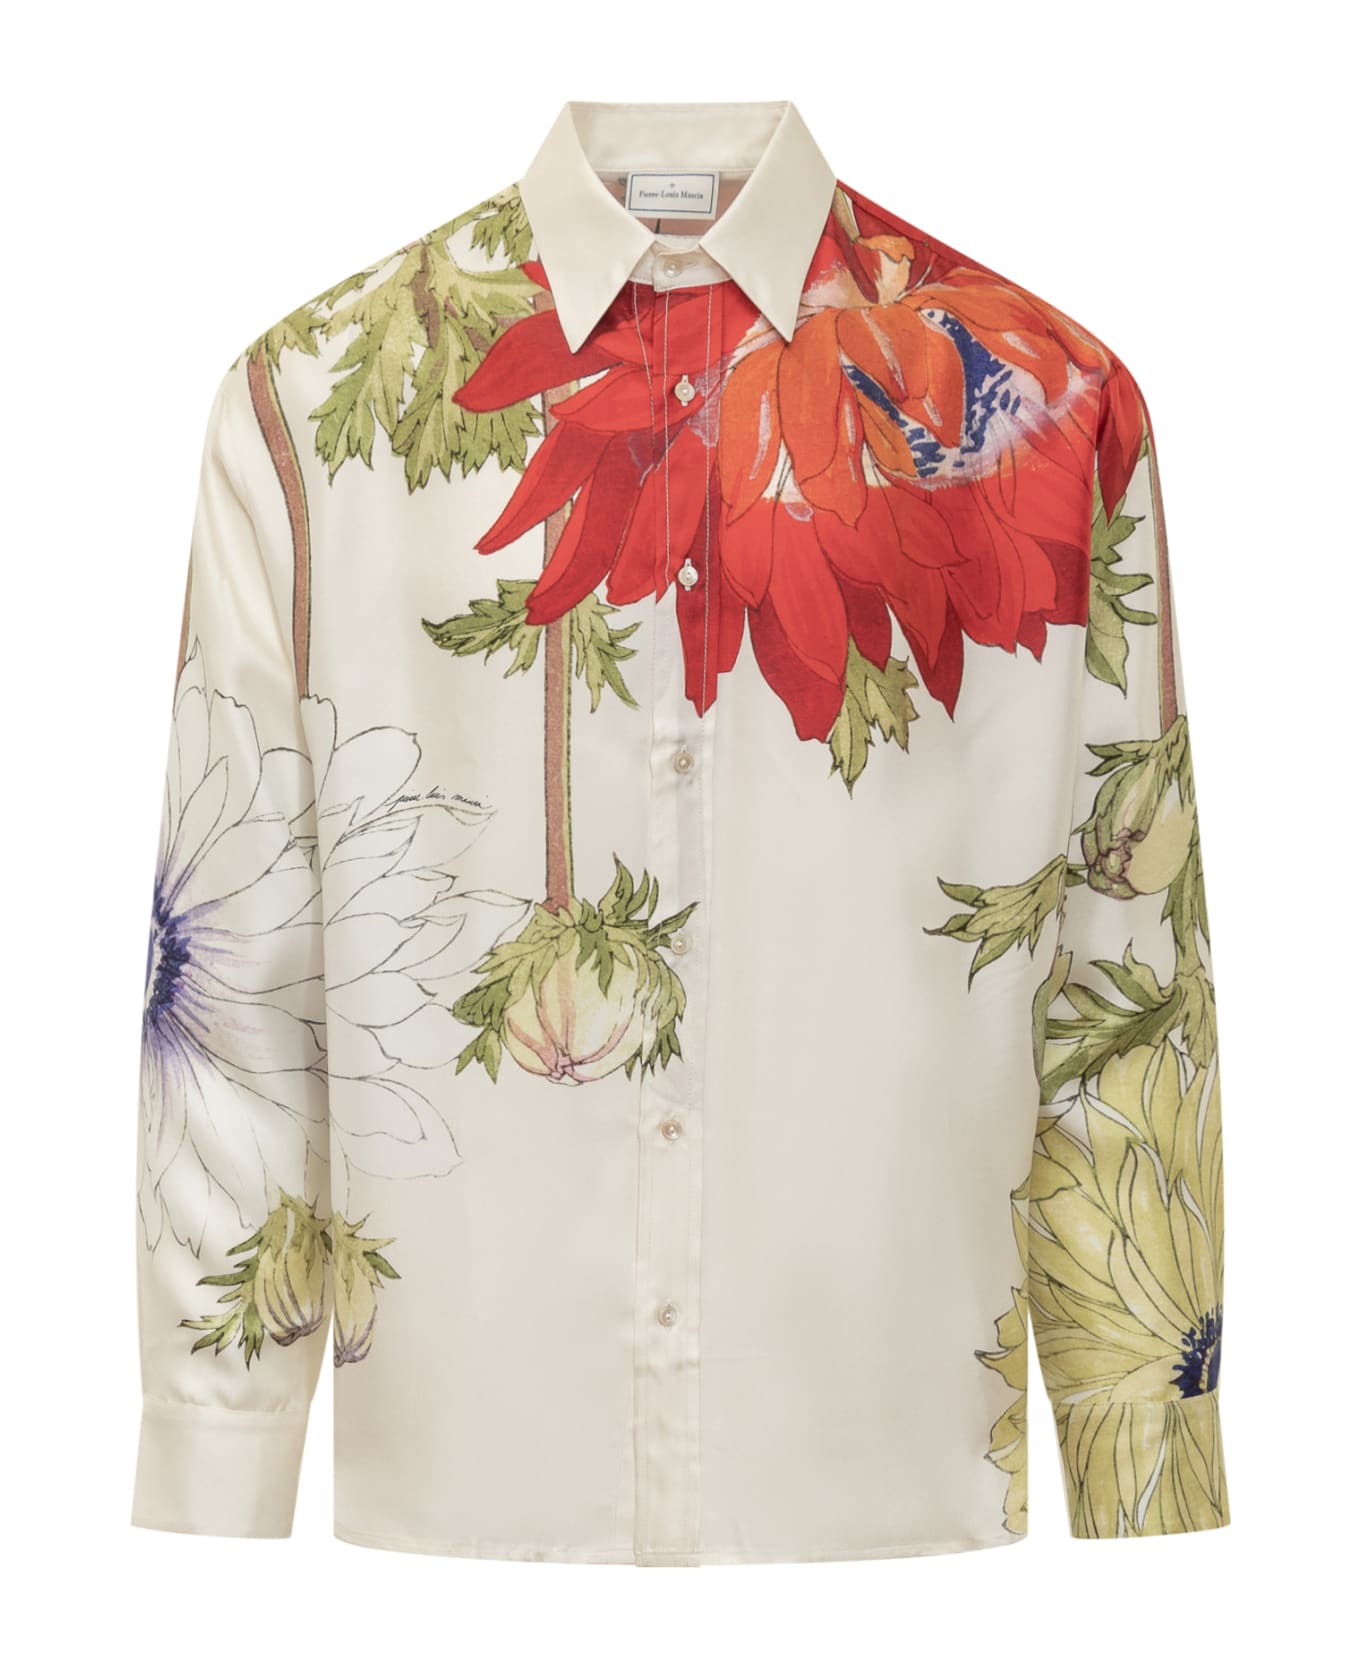 Pierre-Louis Mascia Silk Shirt - BIANCO FANTASIA シャツ